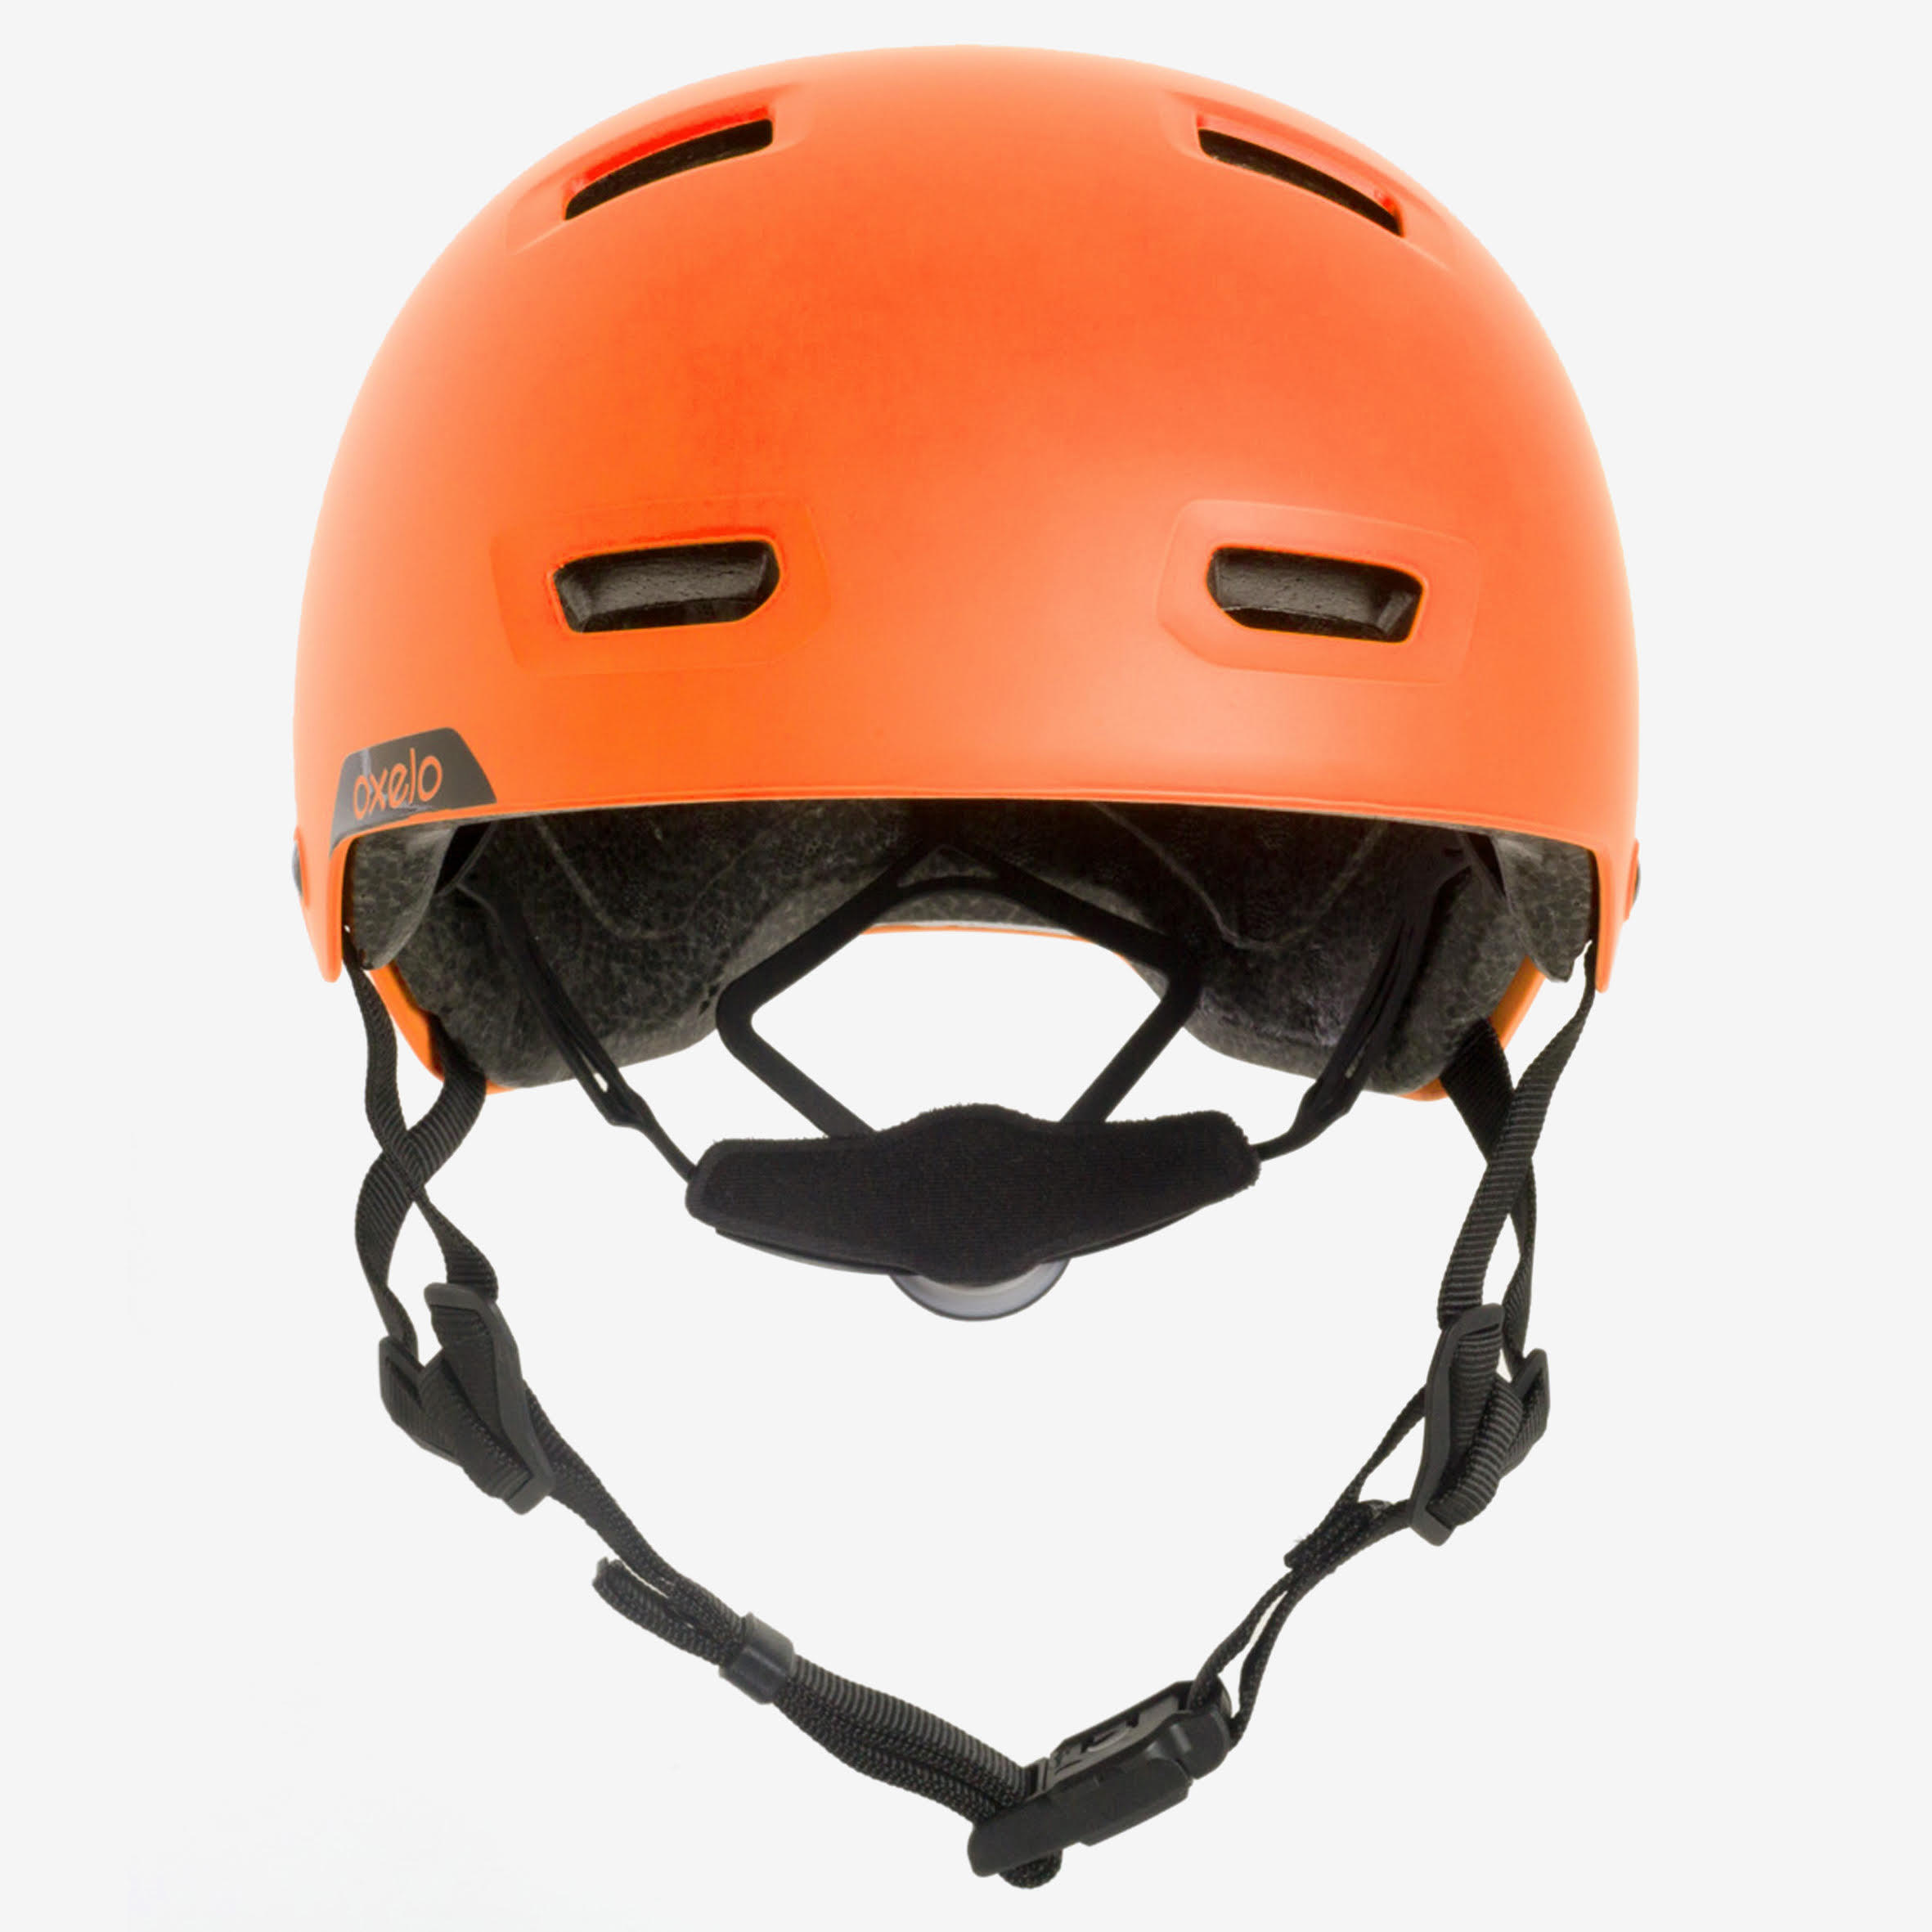 Skating Skateboarding Scootering Helmet MF540 - Neon Orange 3/4